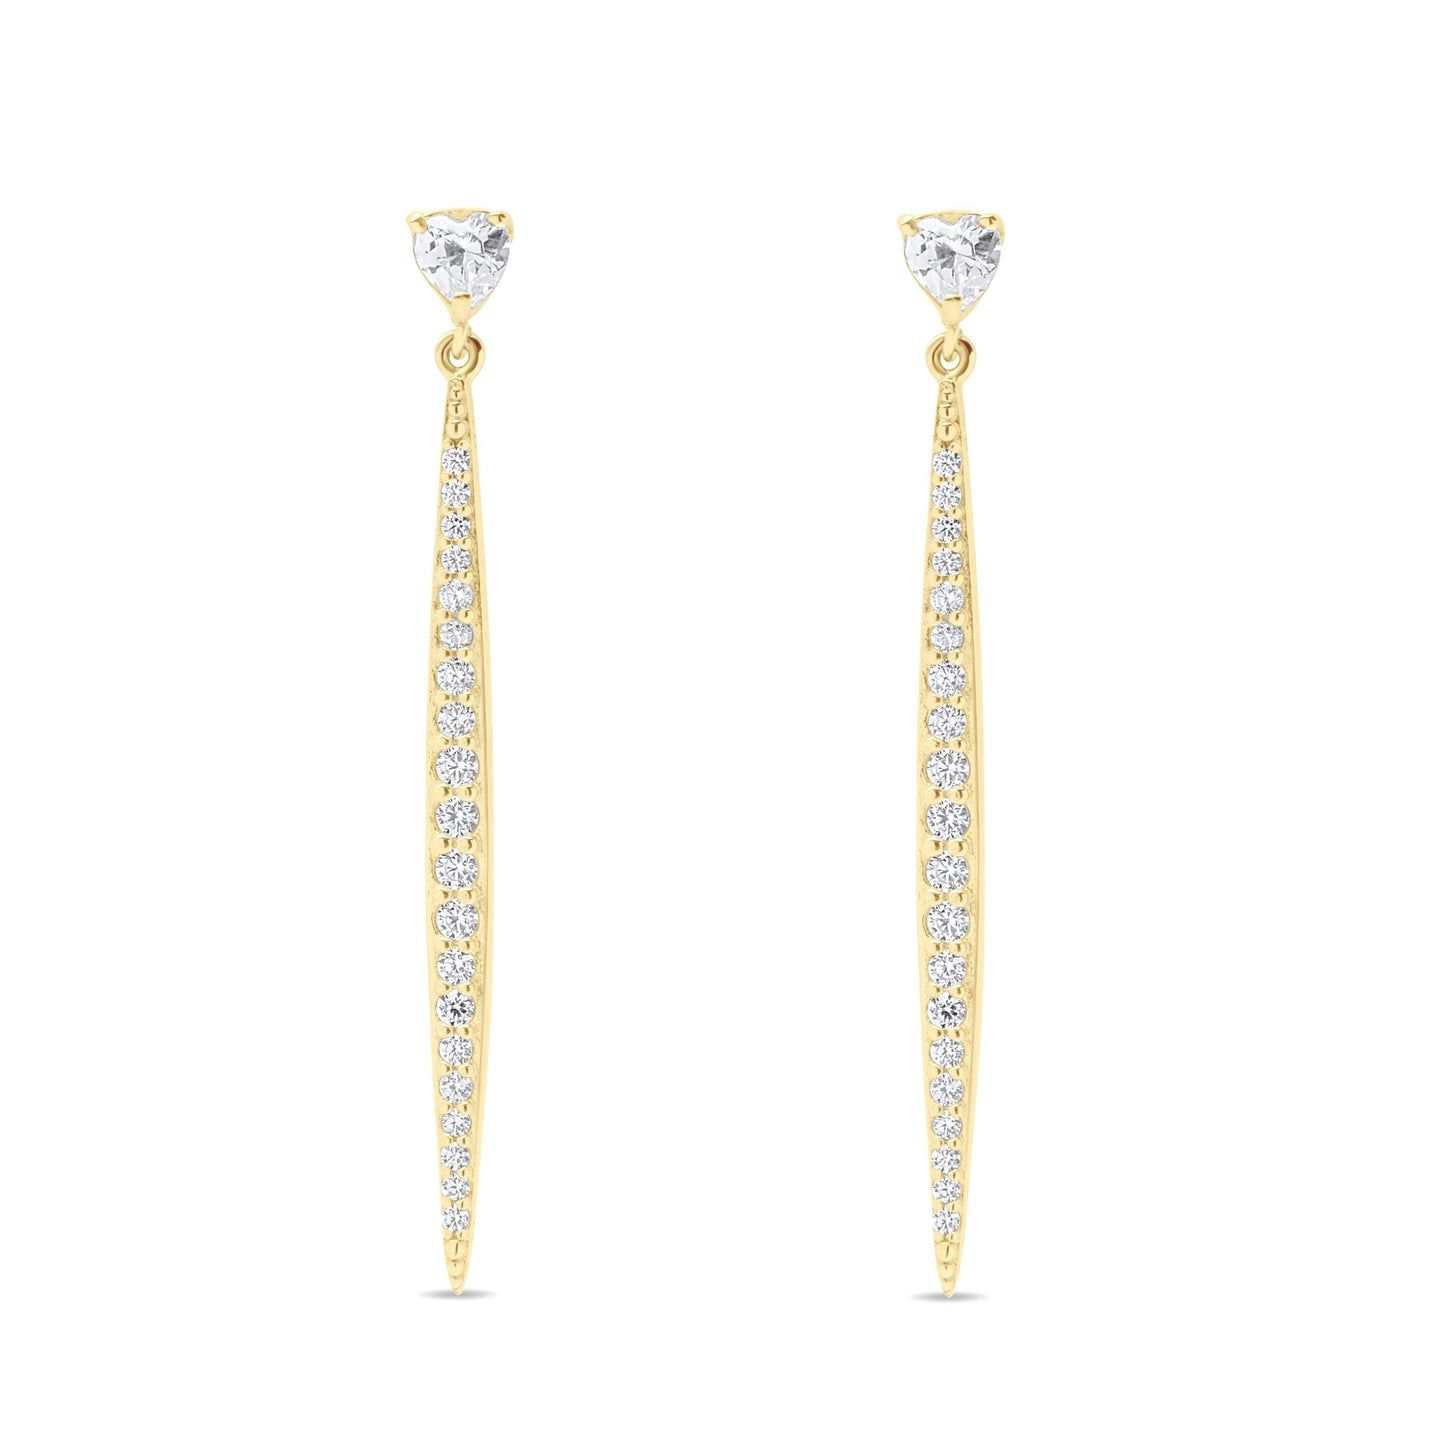 Elegant Line Pair Earrings - Gold Plated